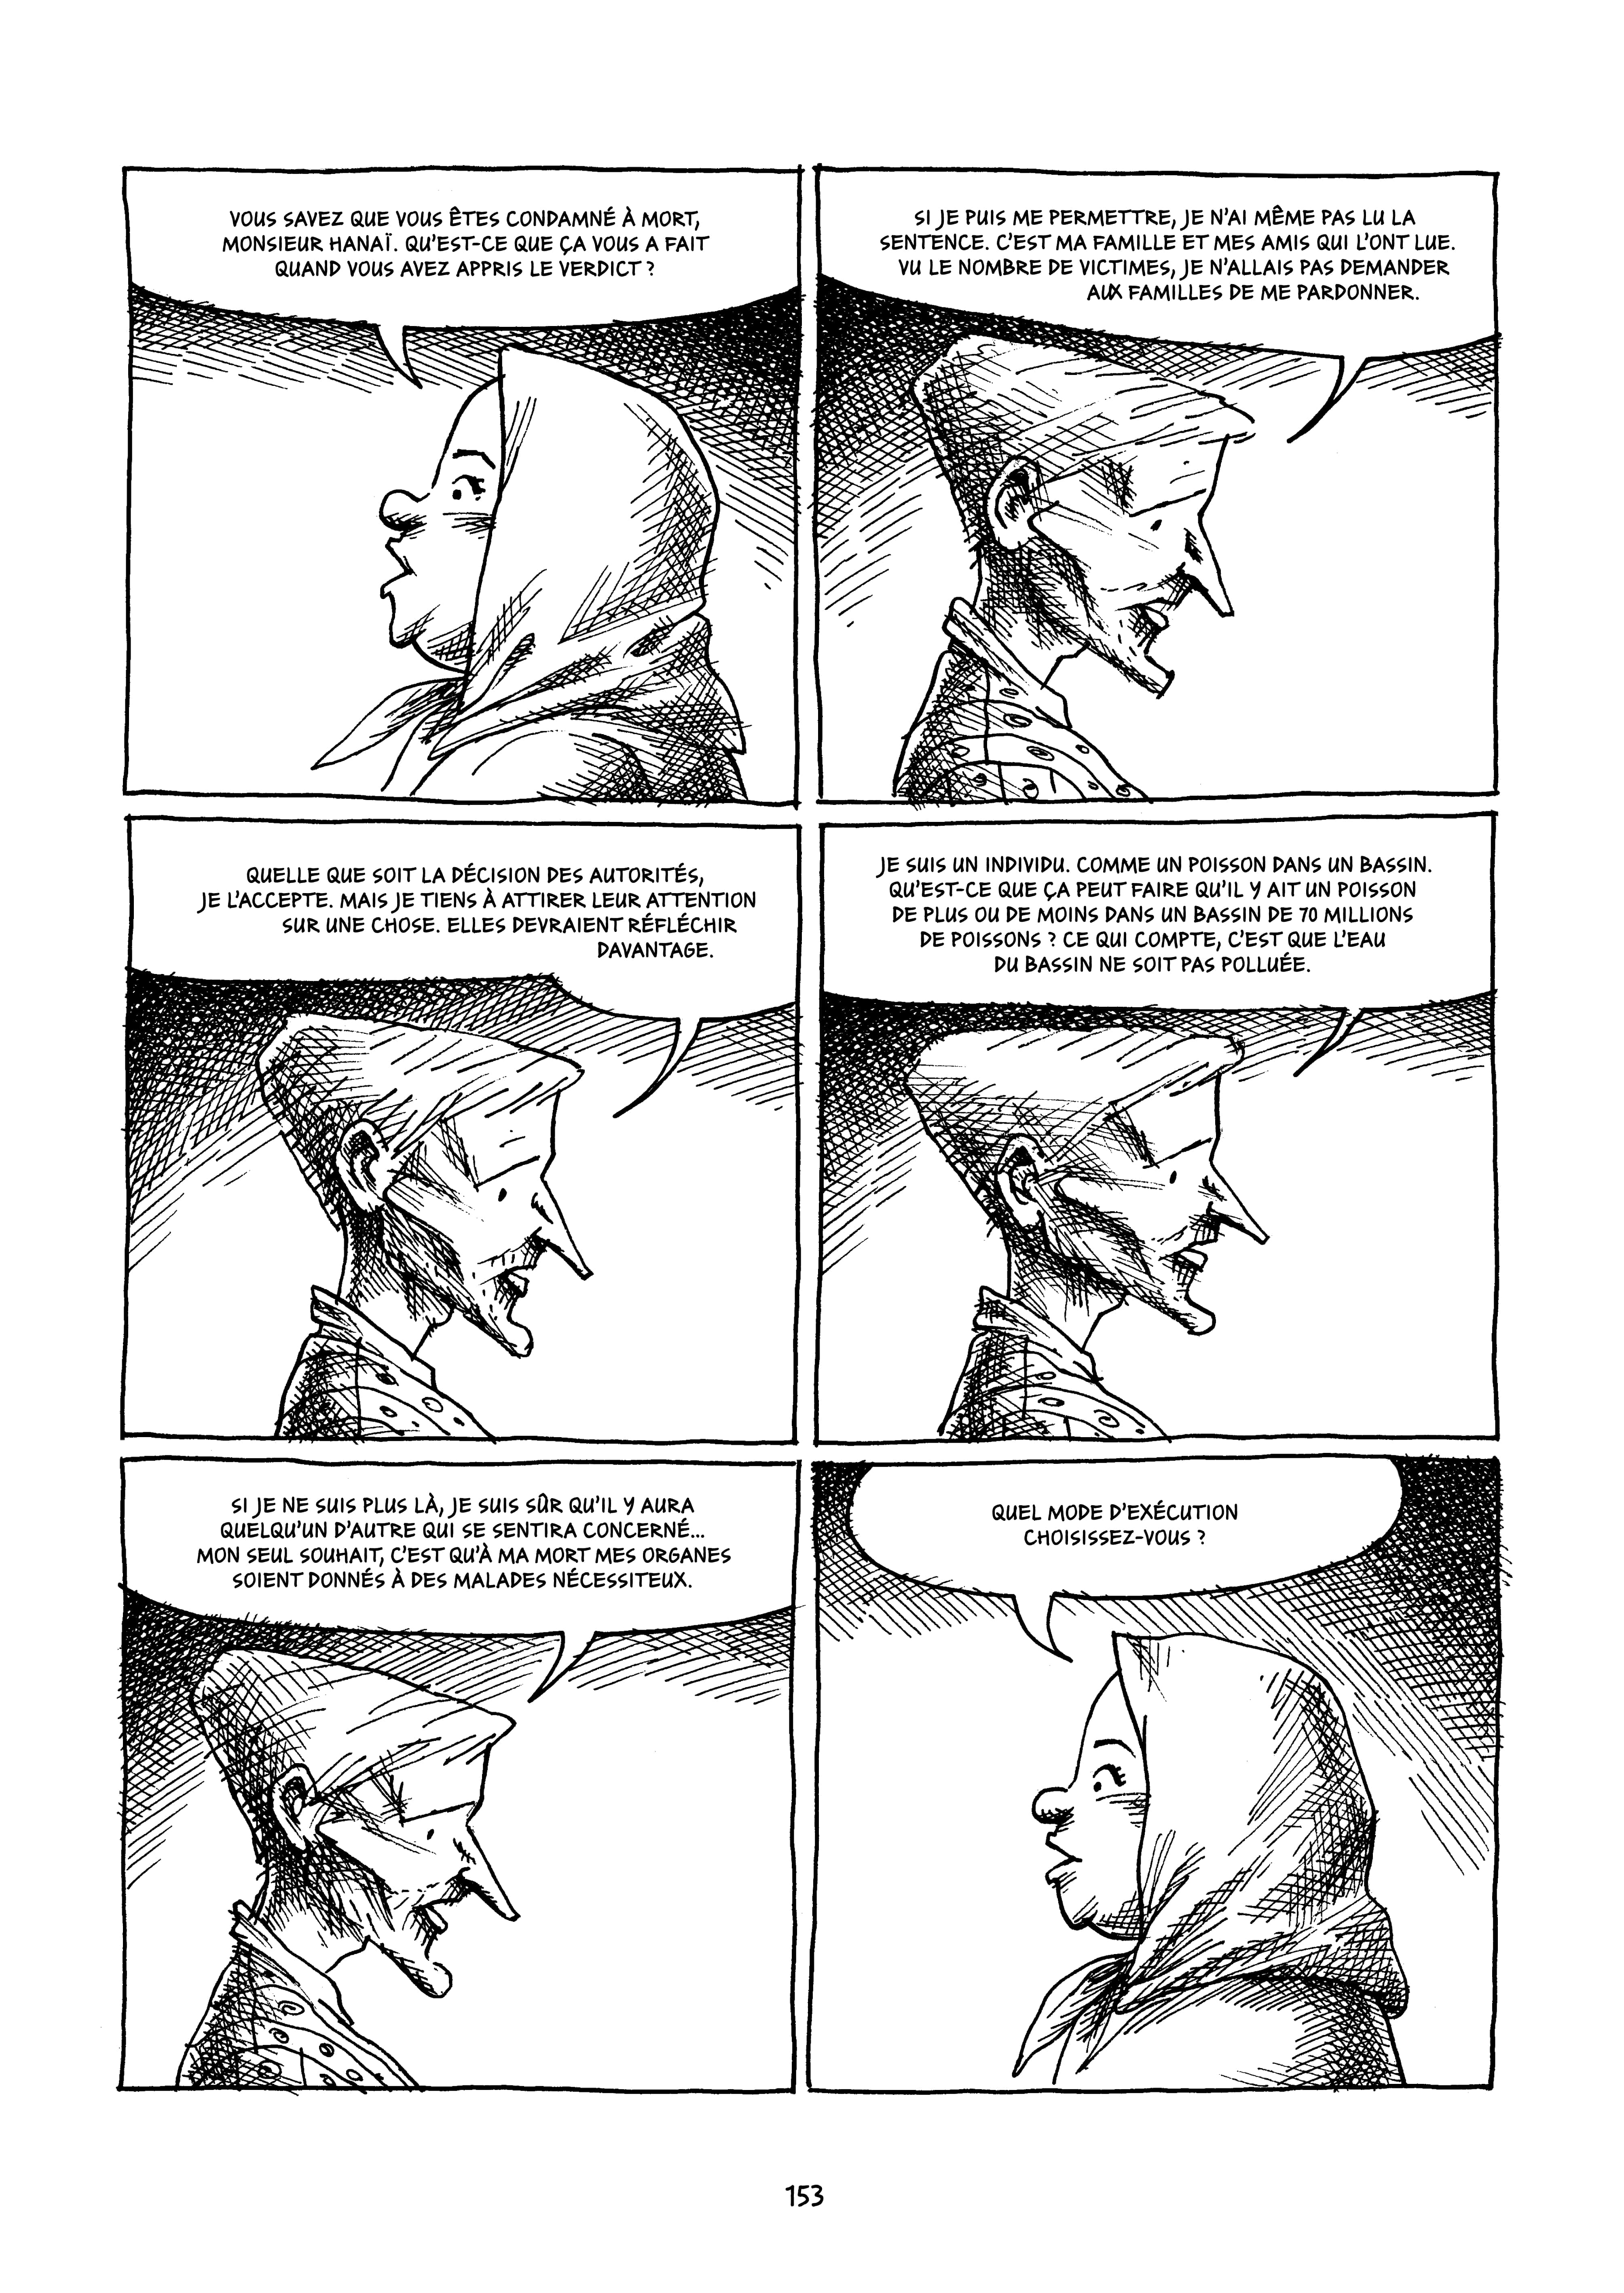 L’Araignée de Mashhad, 2017, Mana Neyestani